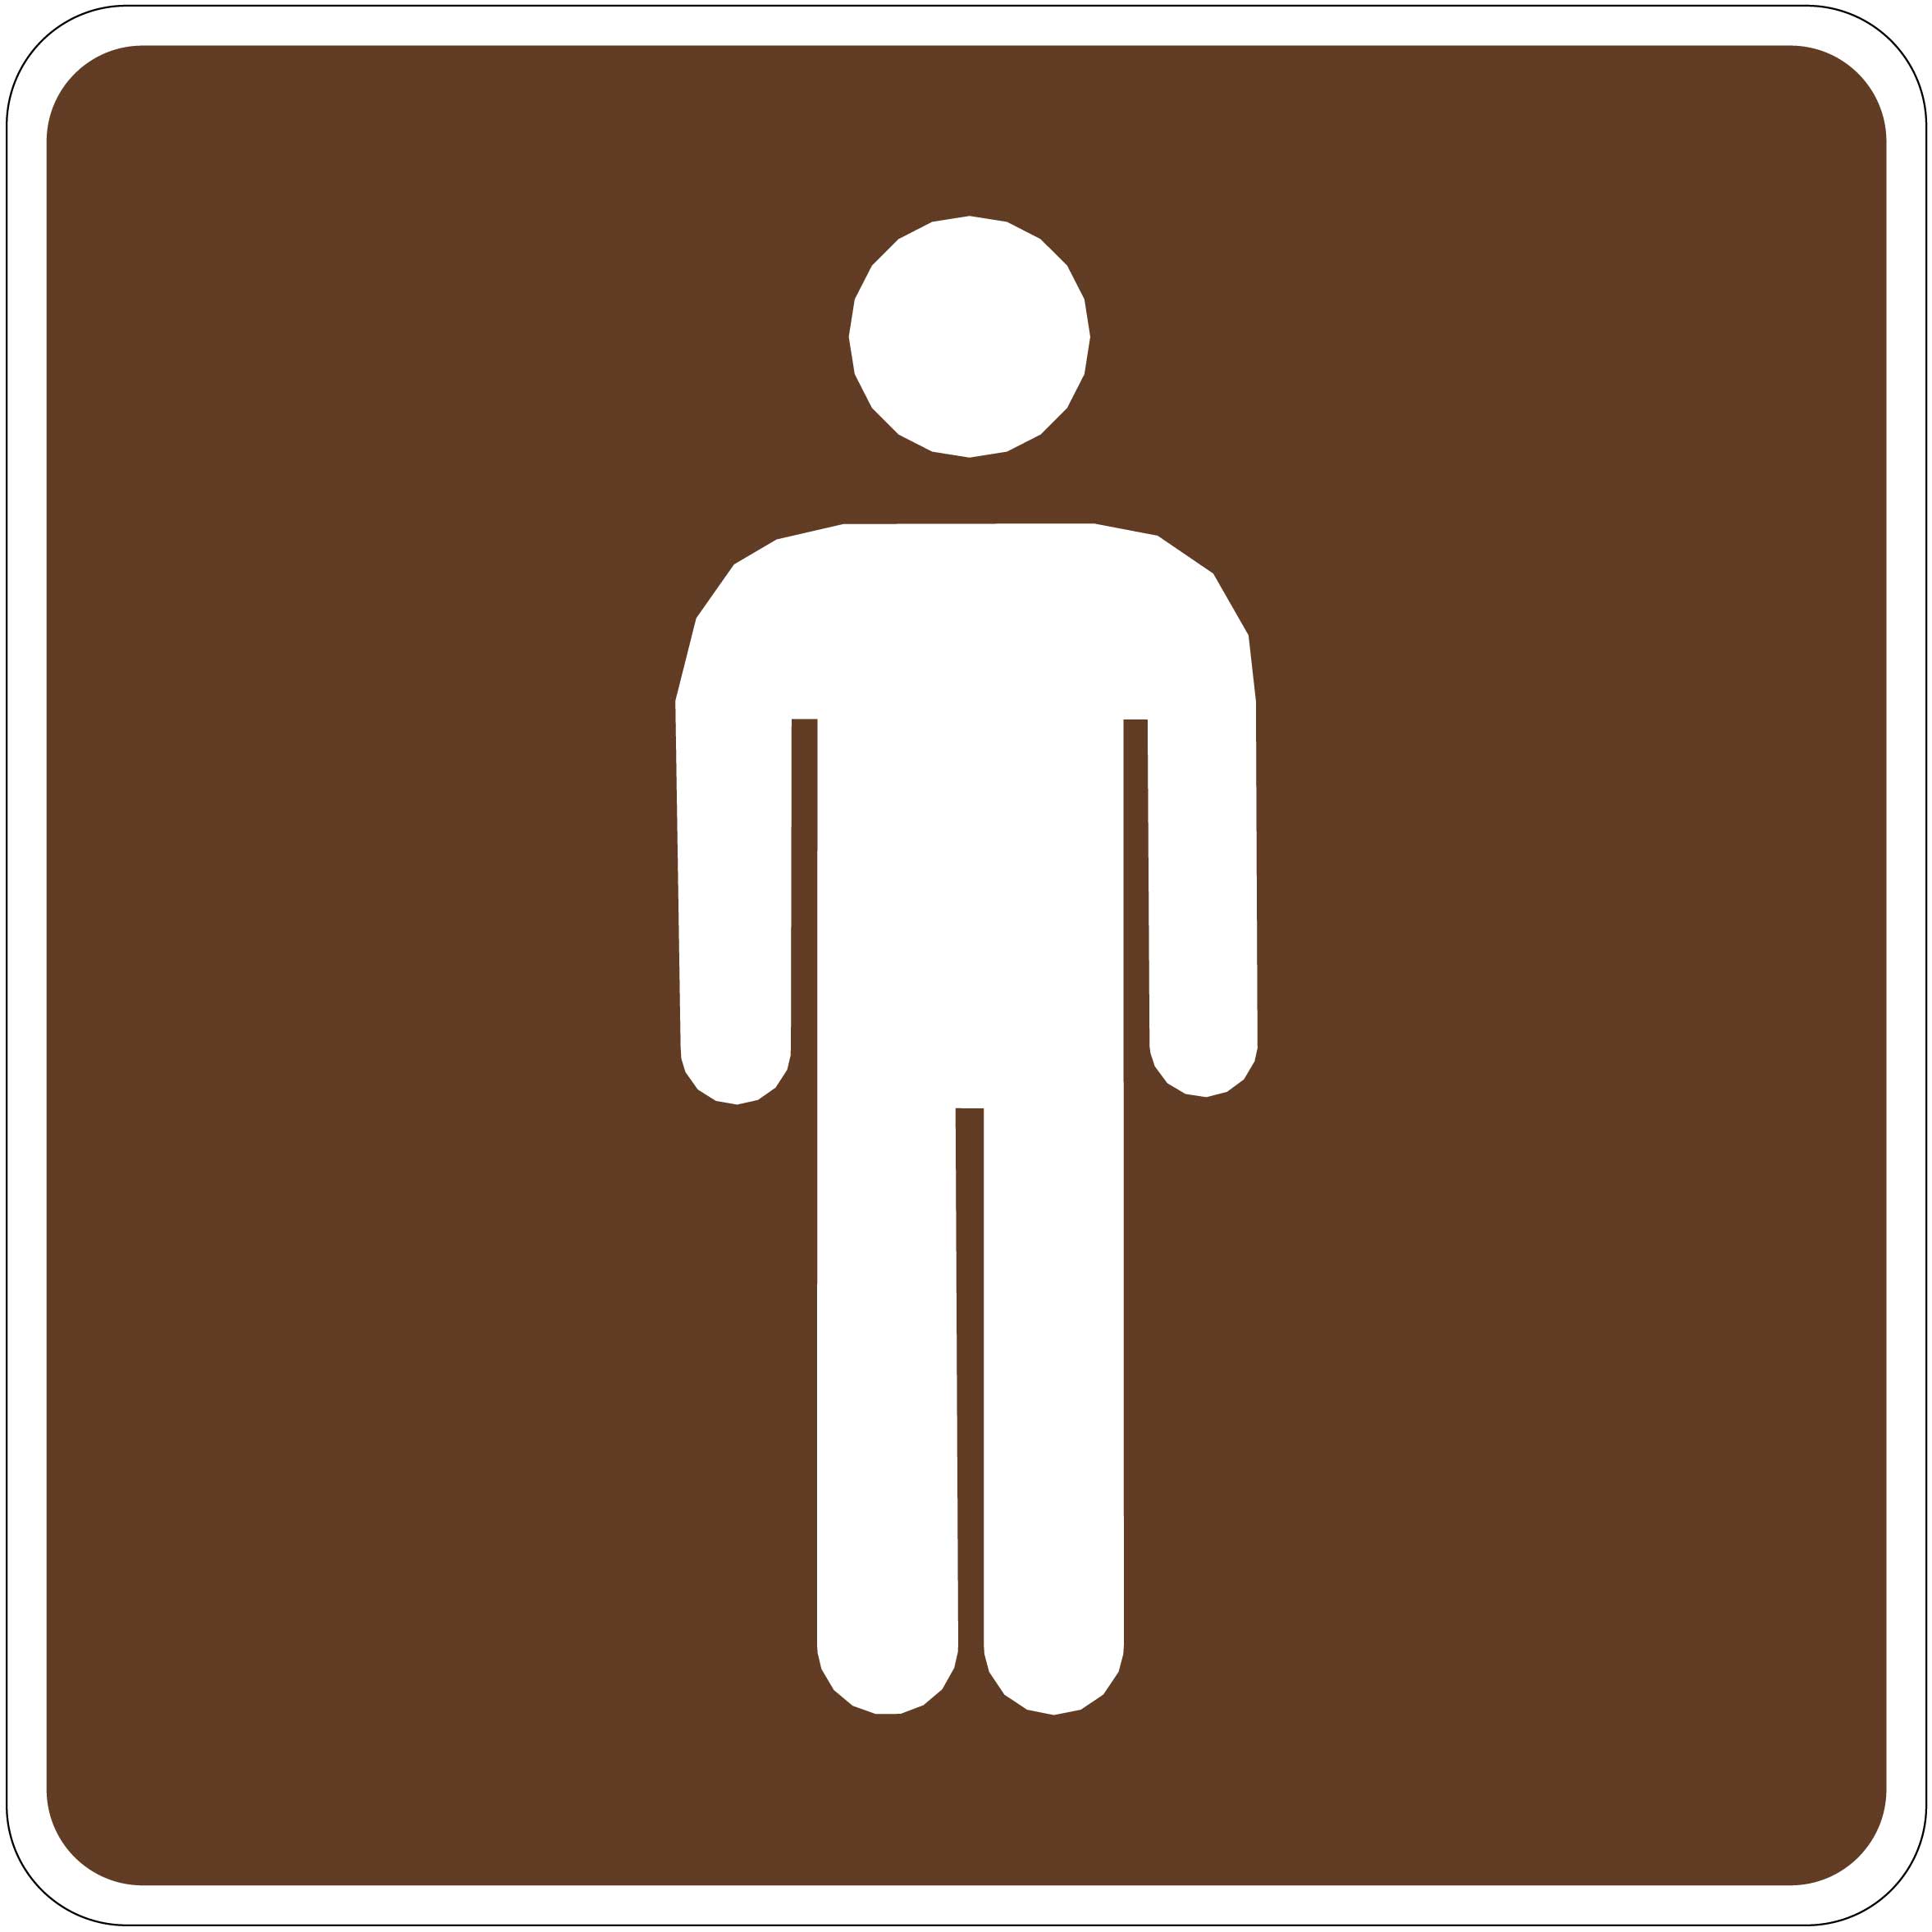 Men Restroom Symbol